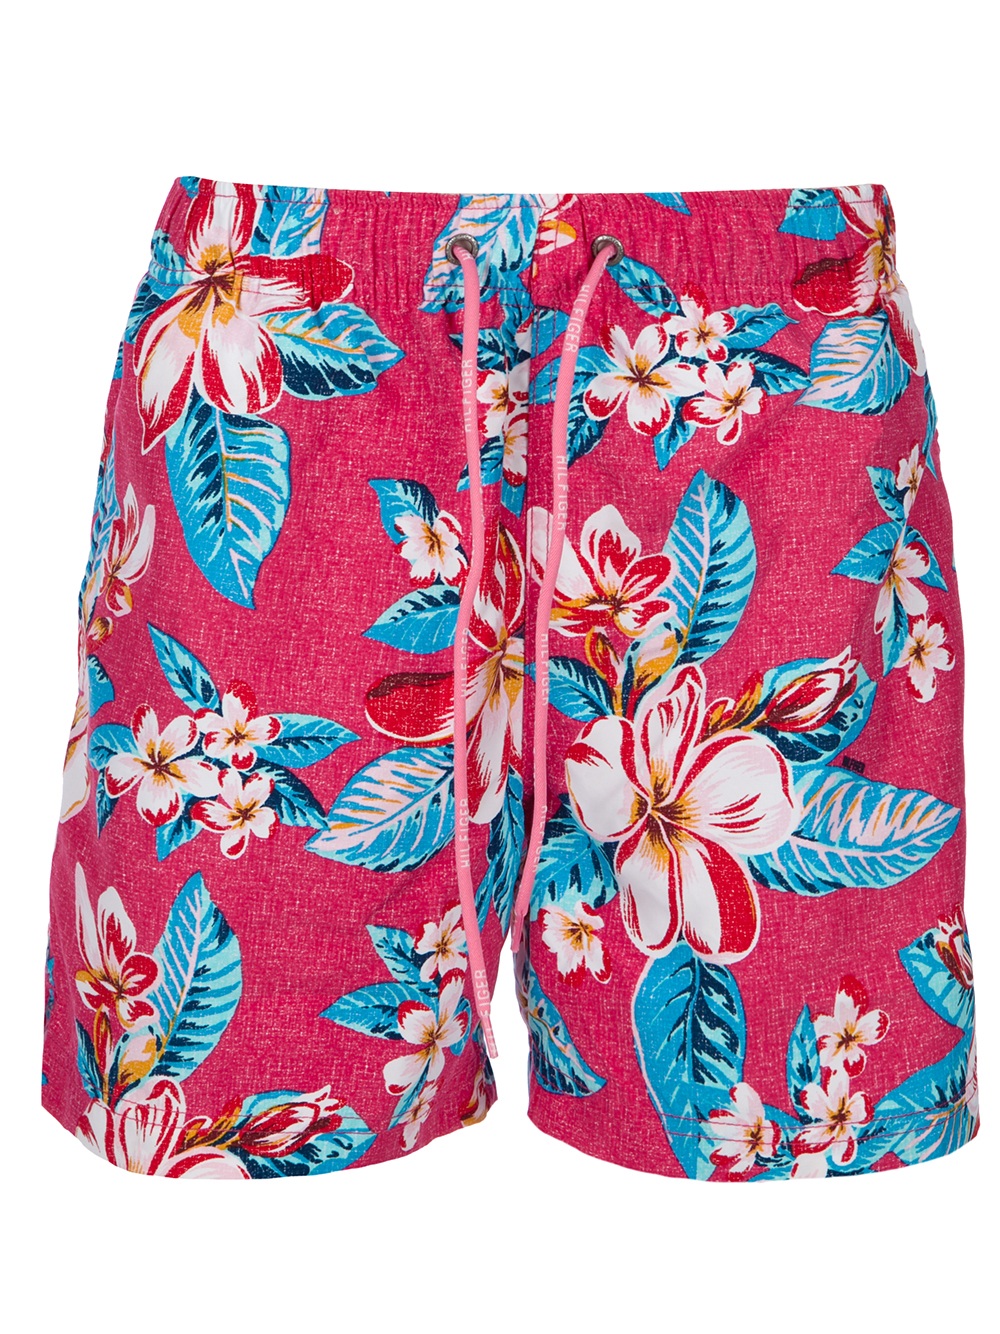 Tommy Hilfiger Hawaiian-Print Swim Shorts in Purple for Men - Lyst